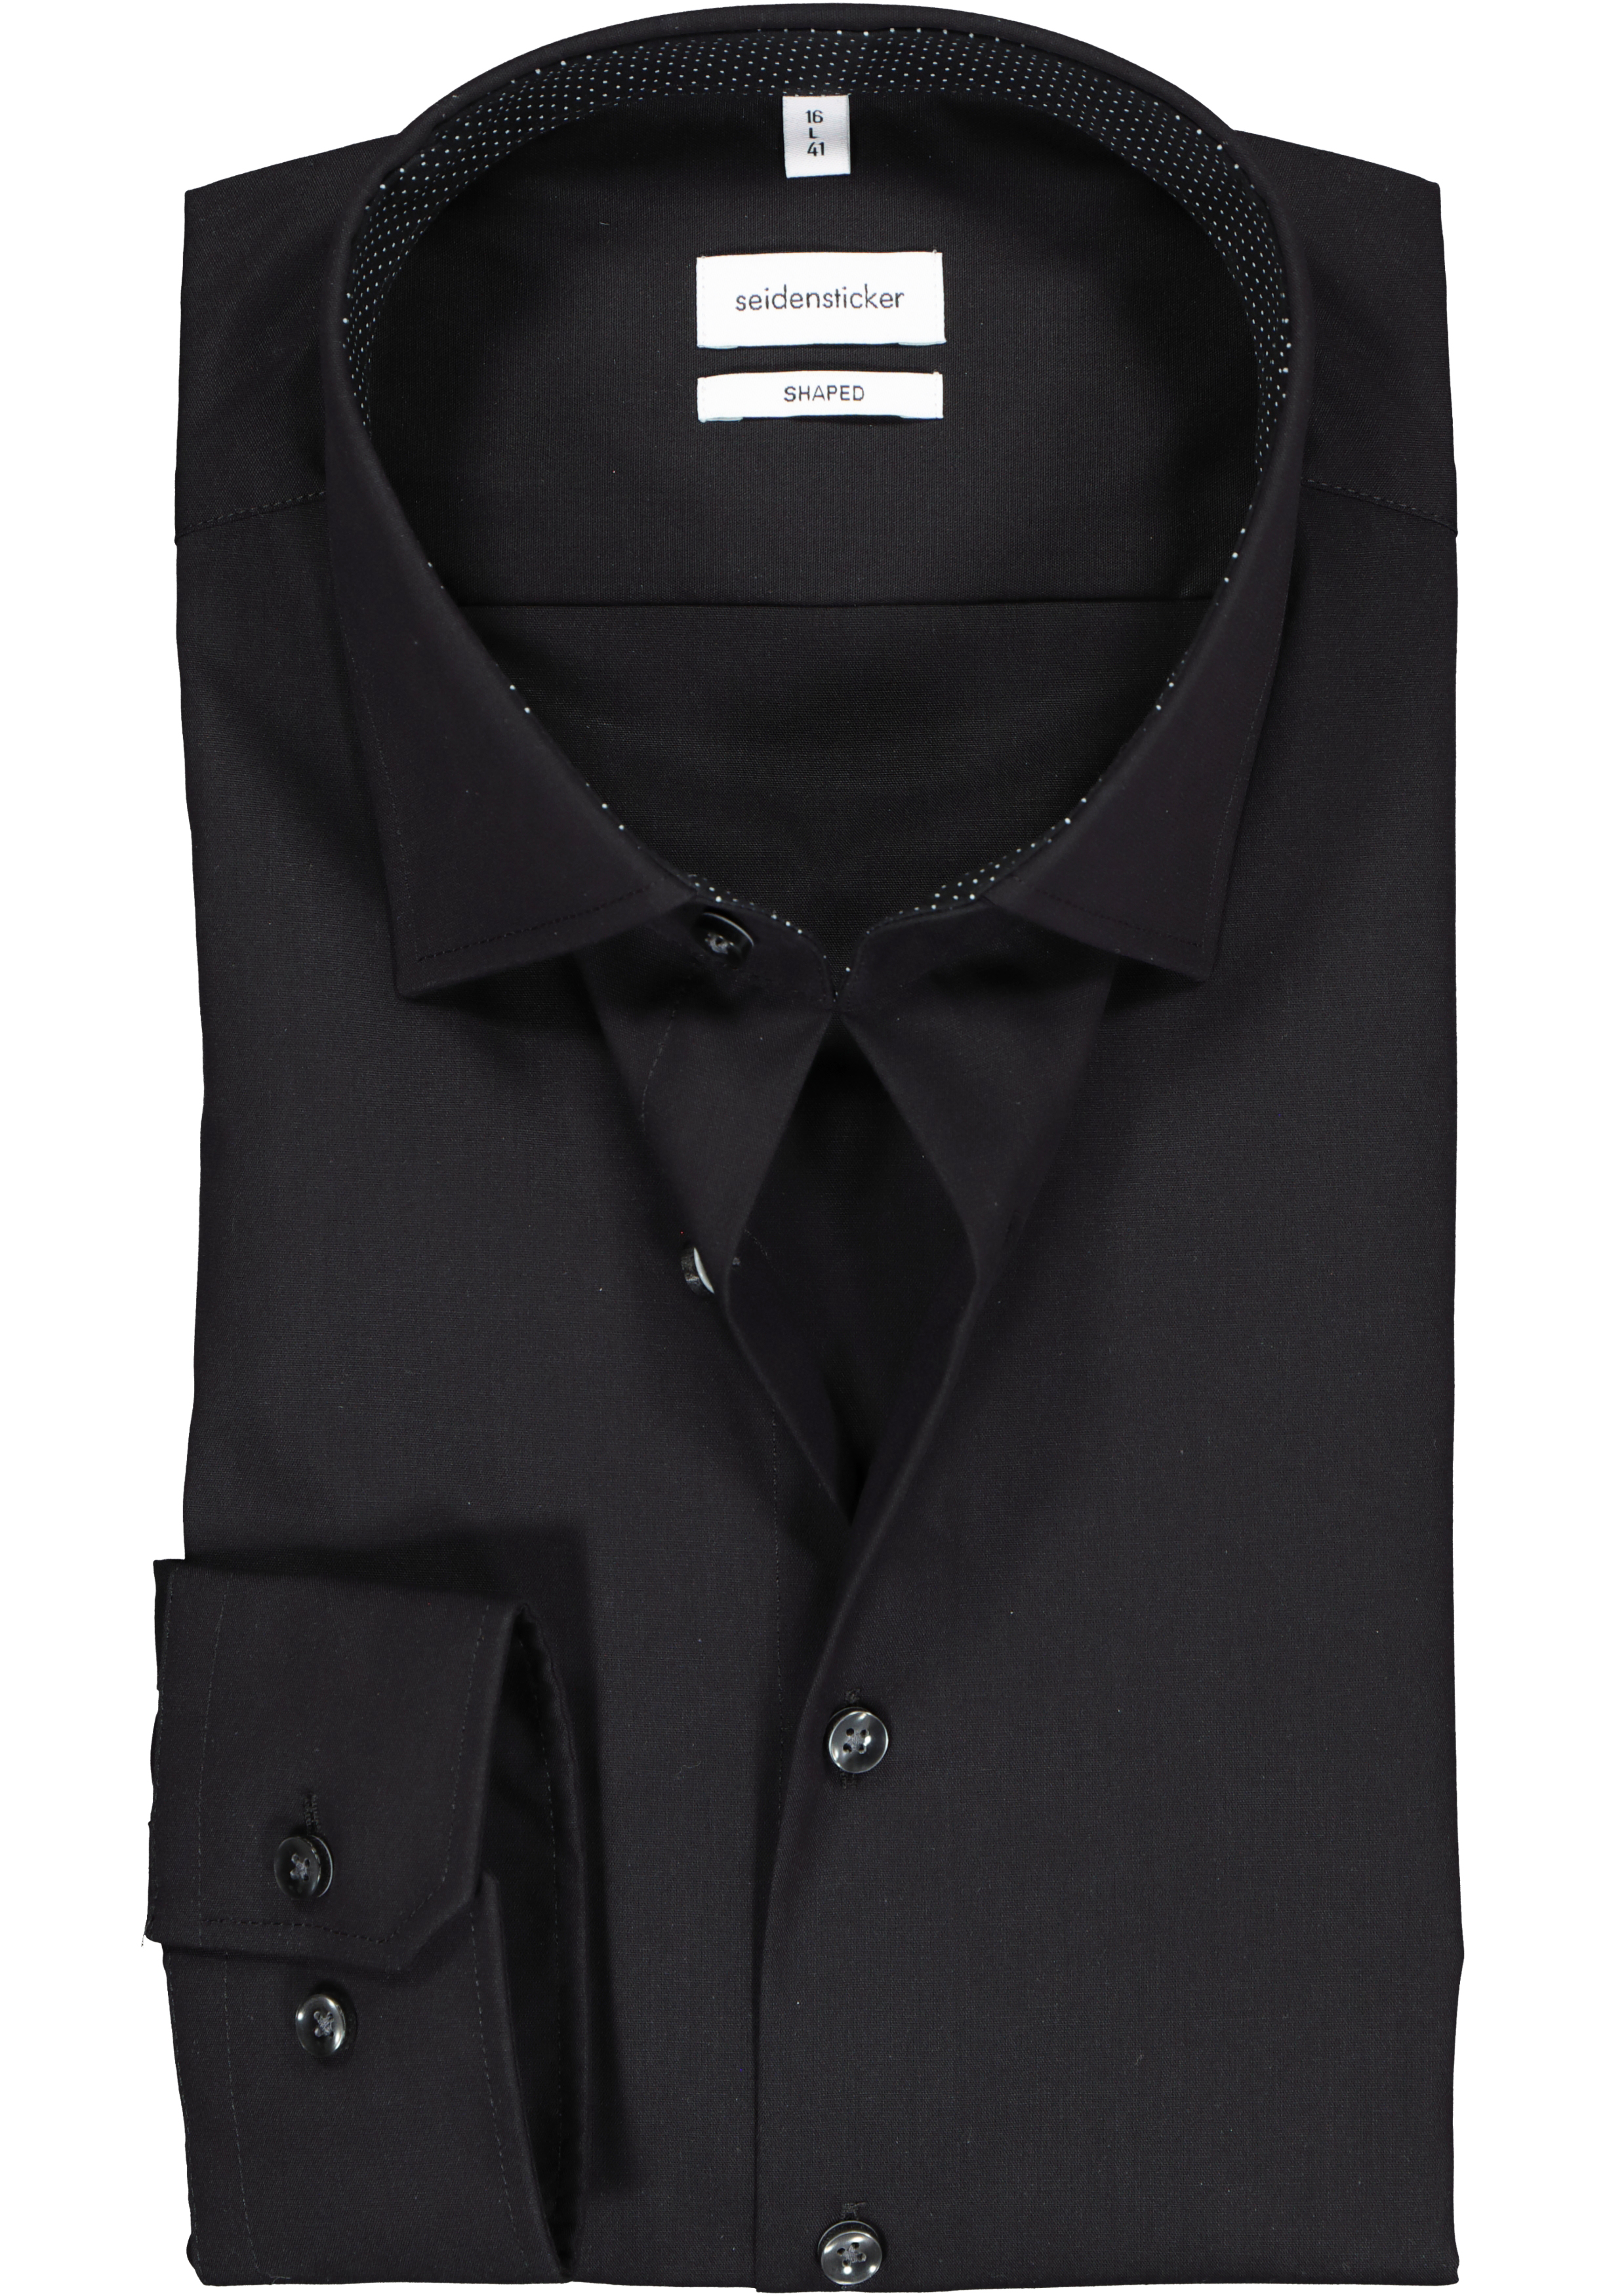 Seidensticker shaped fit overhemd, zwart (contrast)